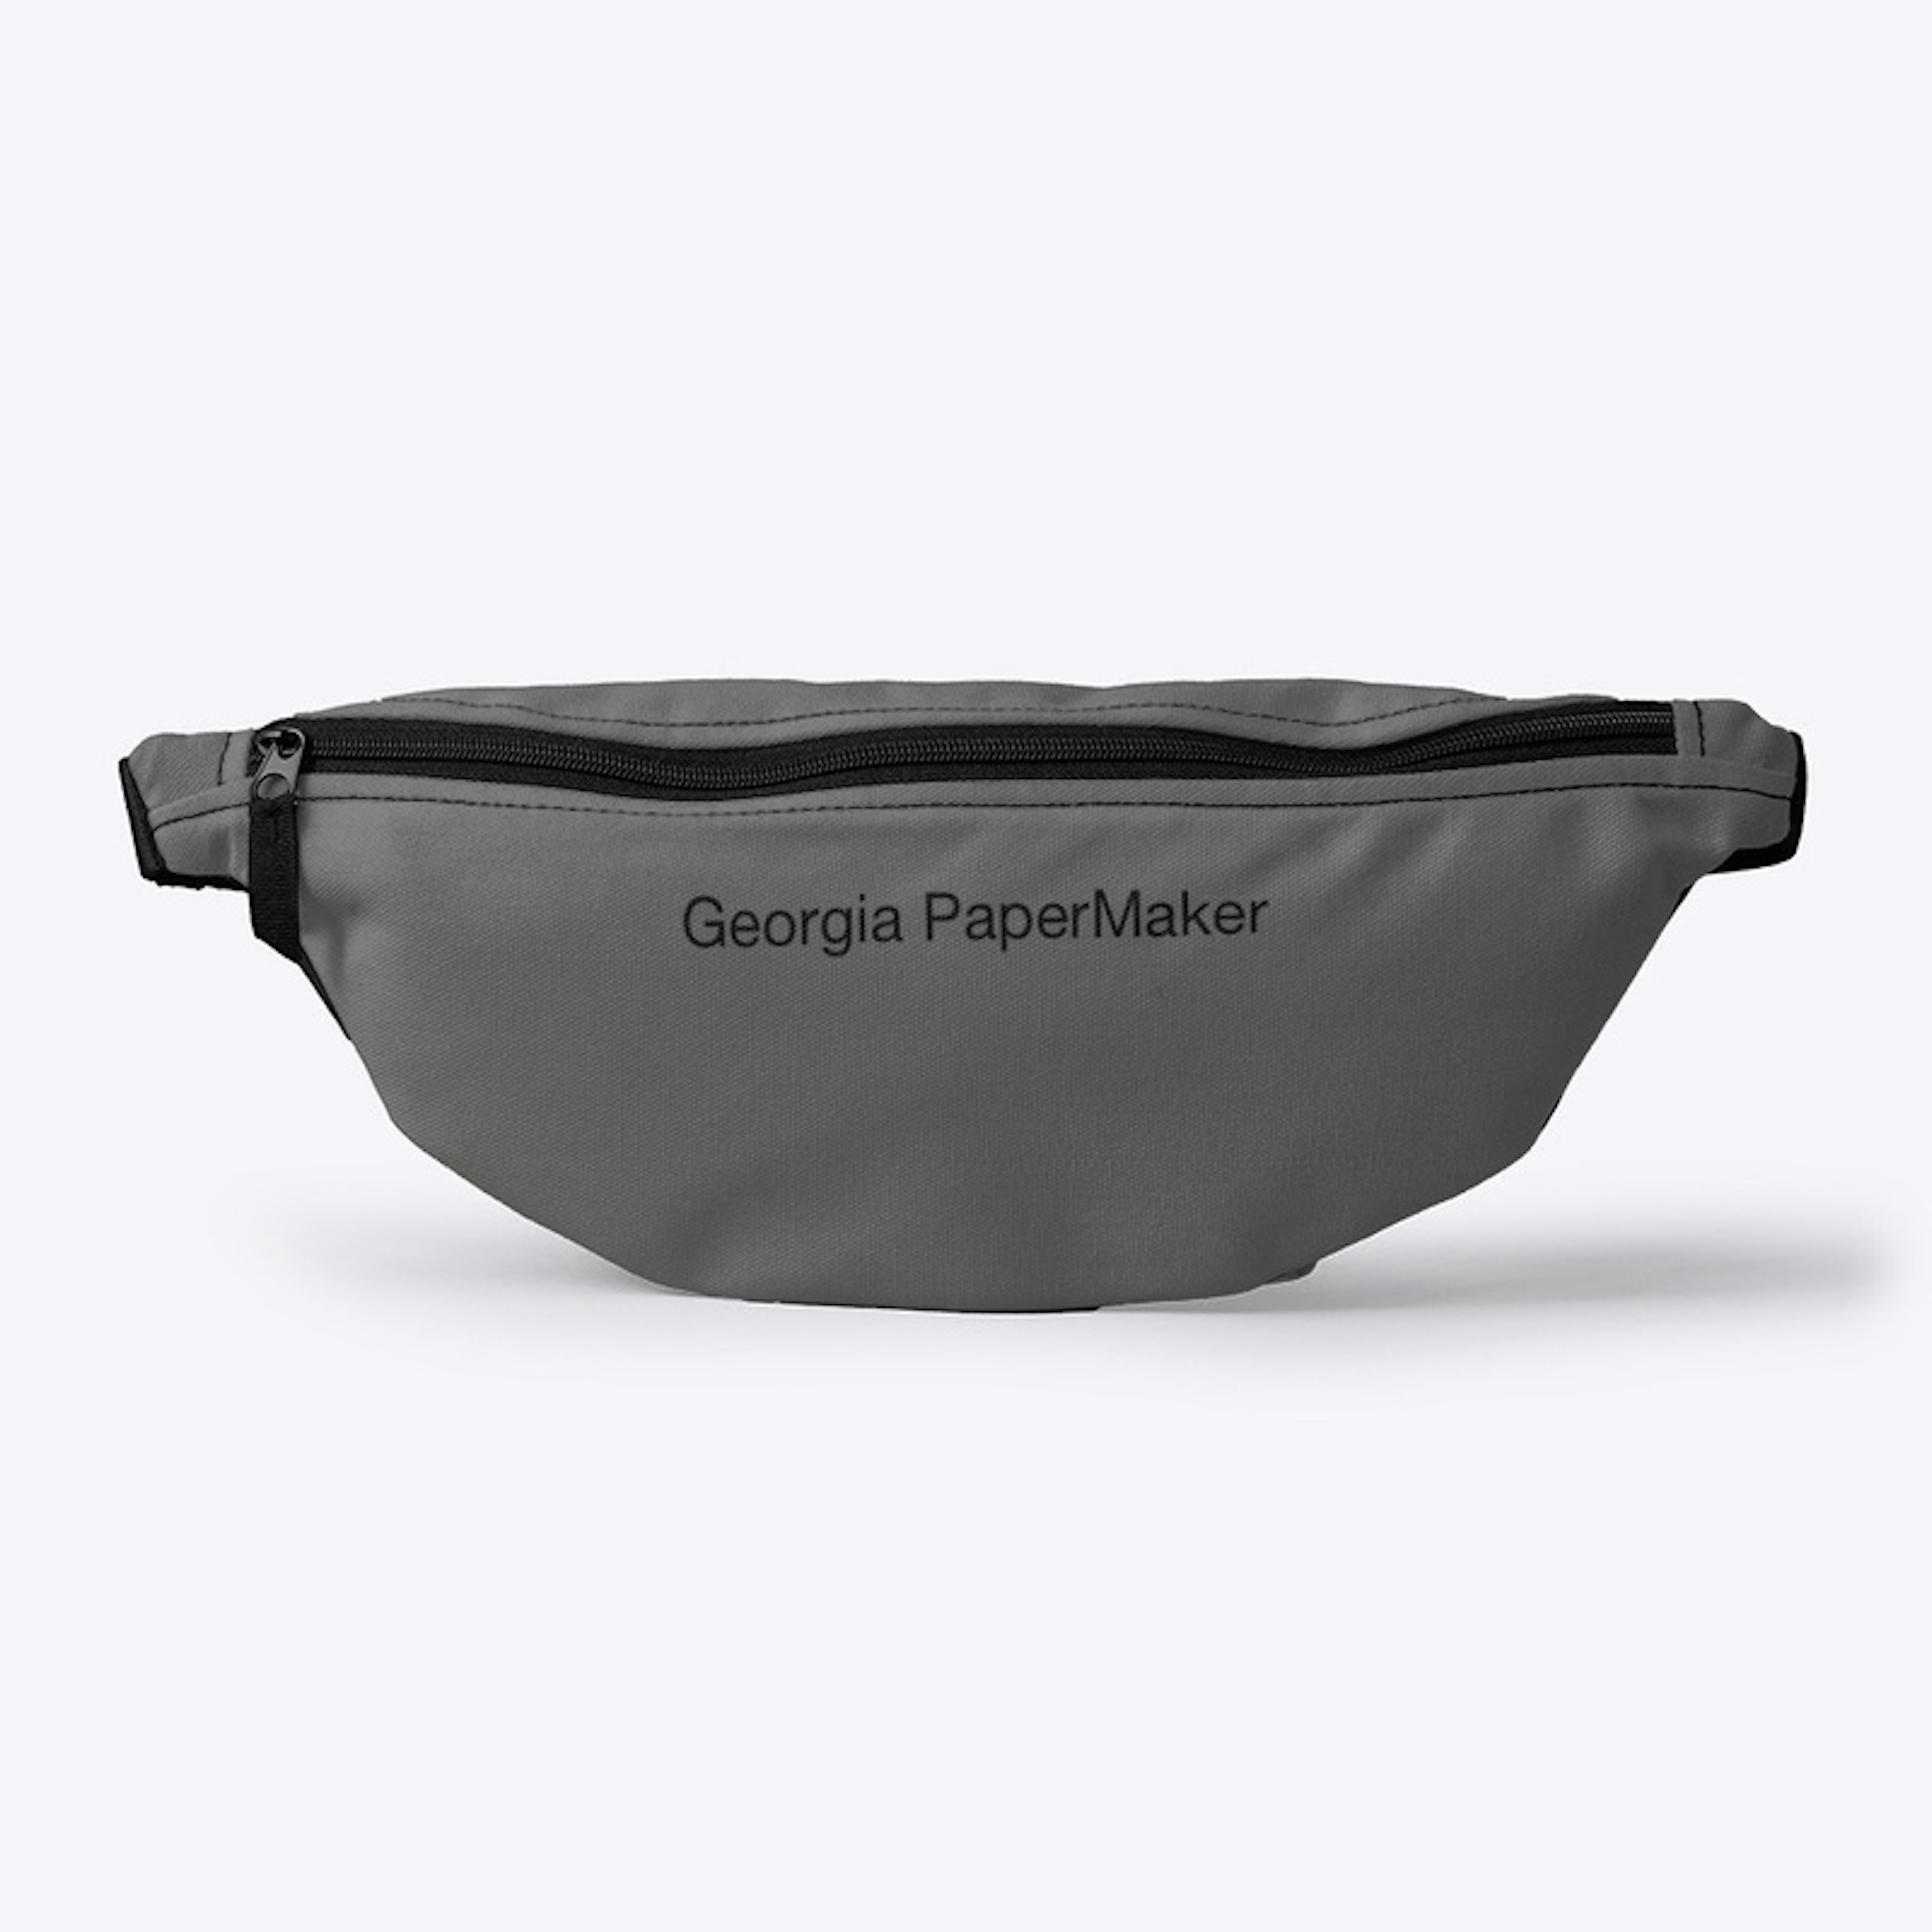 Georgia Papermaker